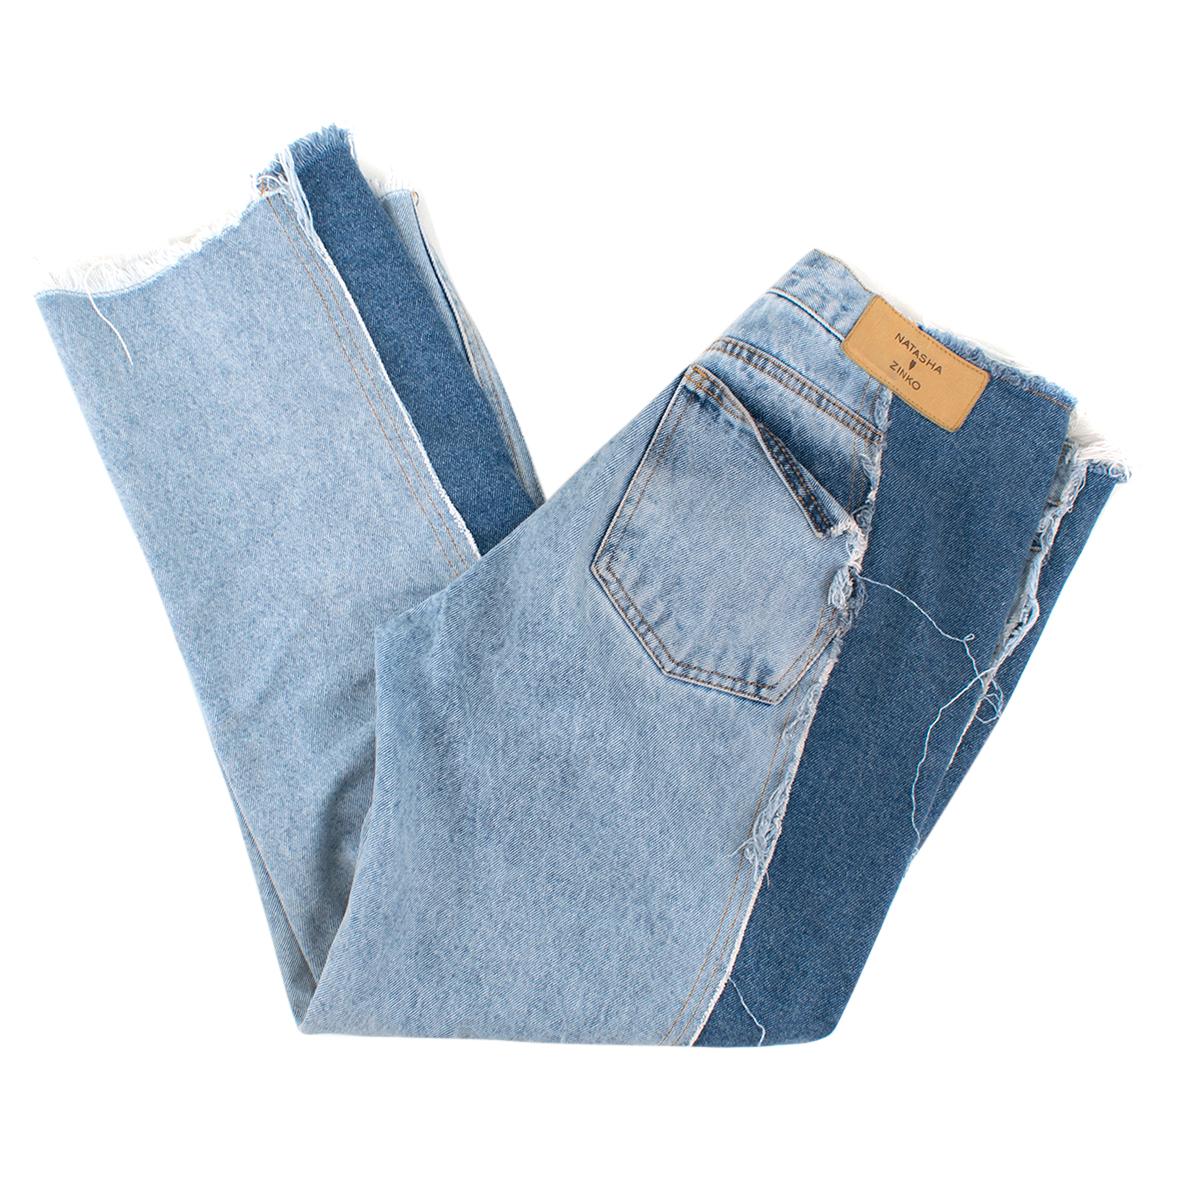 Blue Natasha Zinko Two-Tone Distressed Cropped Jeans US 4 For Sale